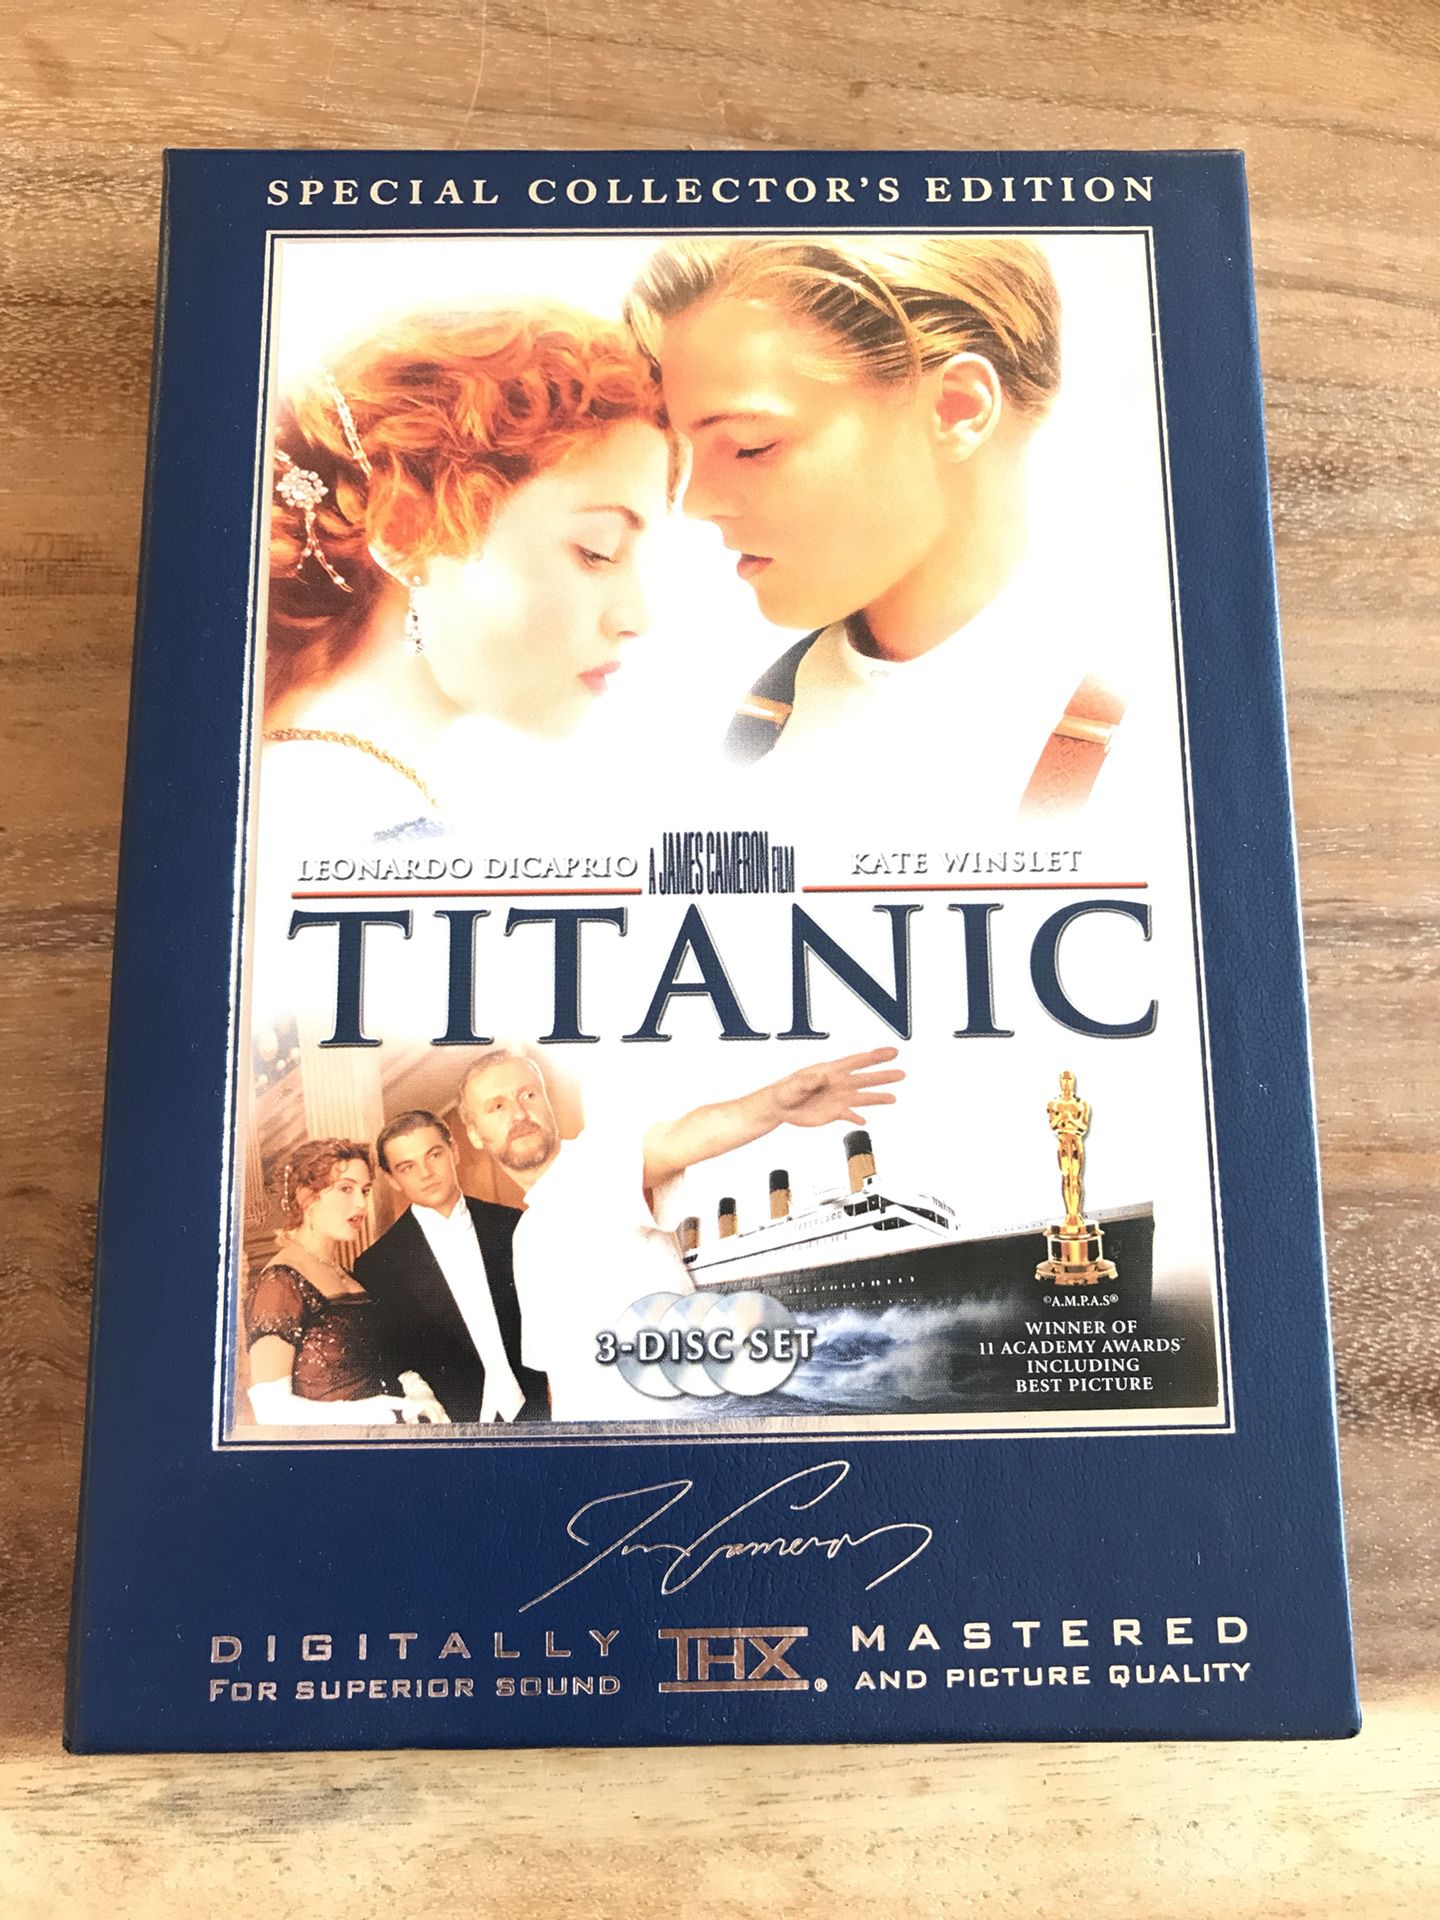 Titanic collectors edition DVD set